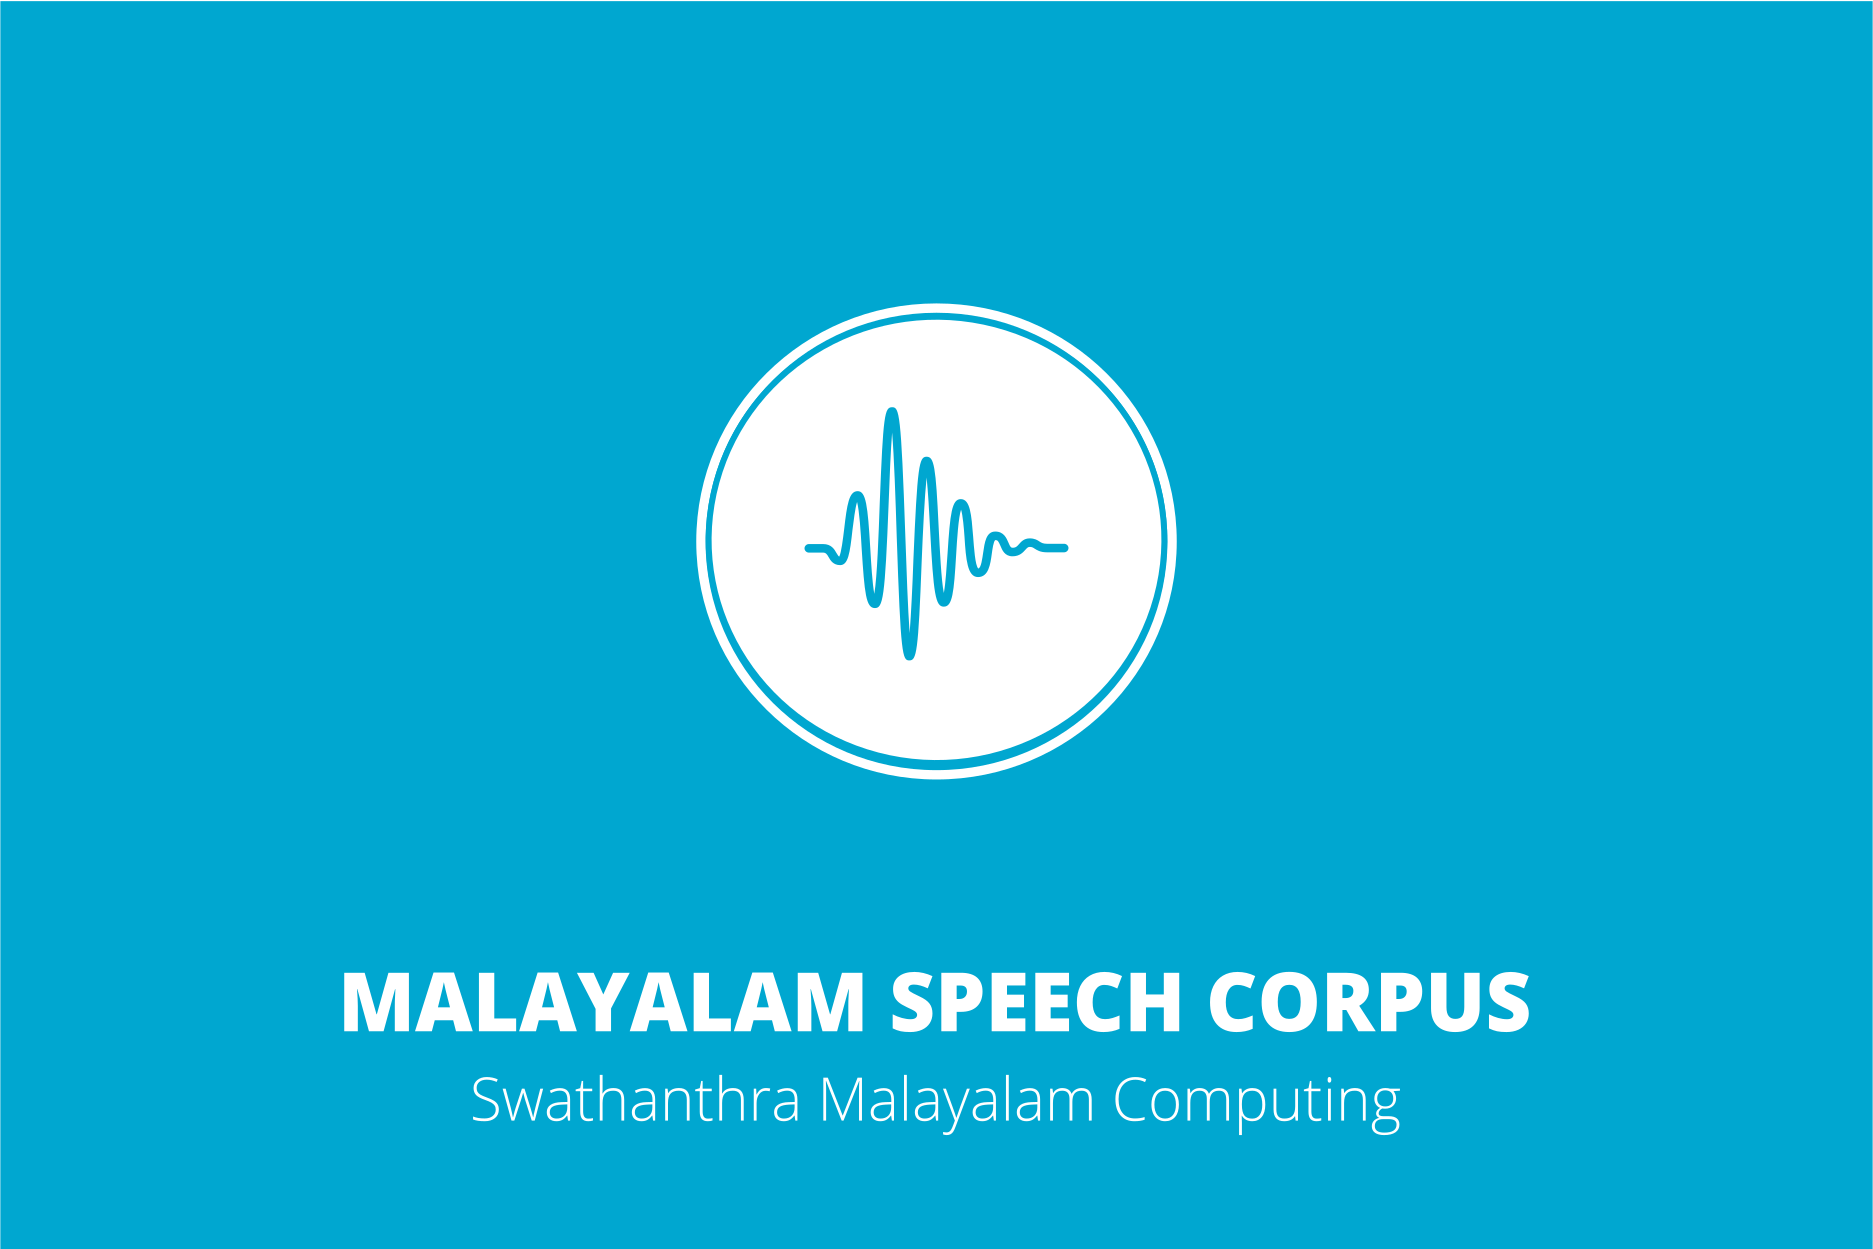 /img/malayalam-speech-corpus/msc.png